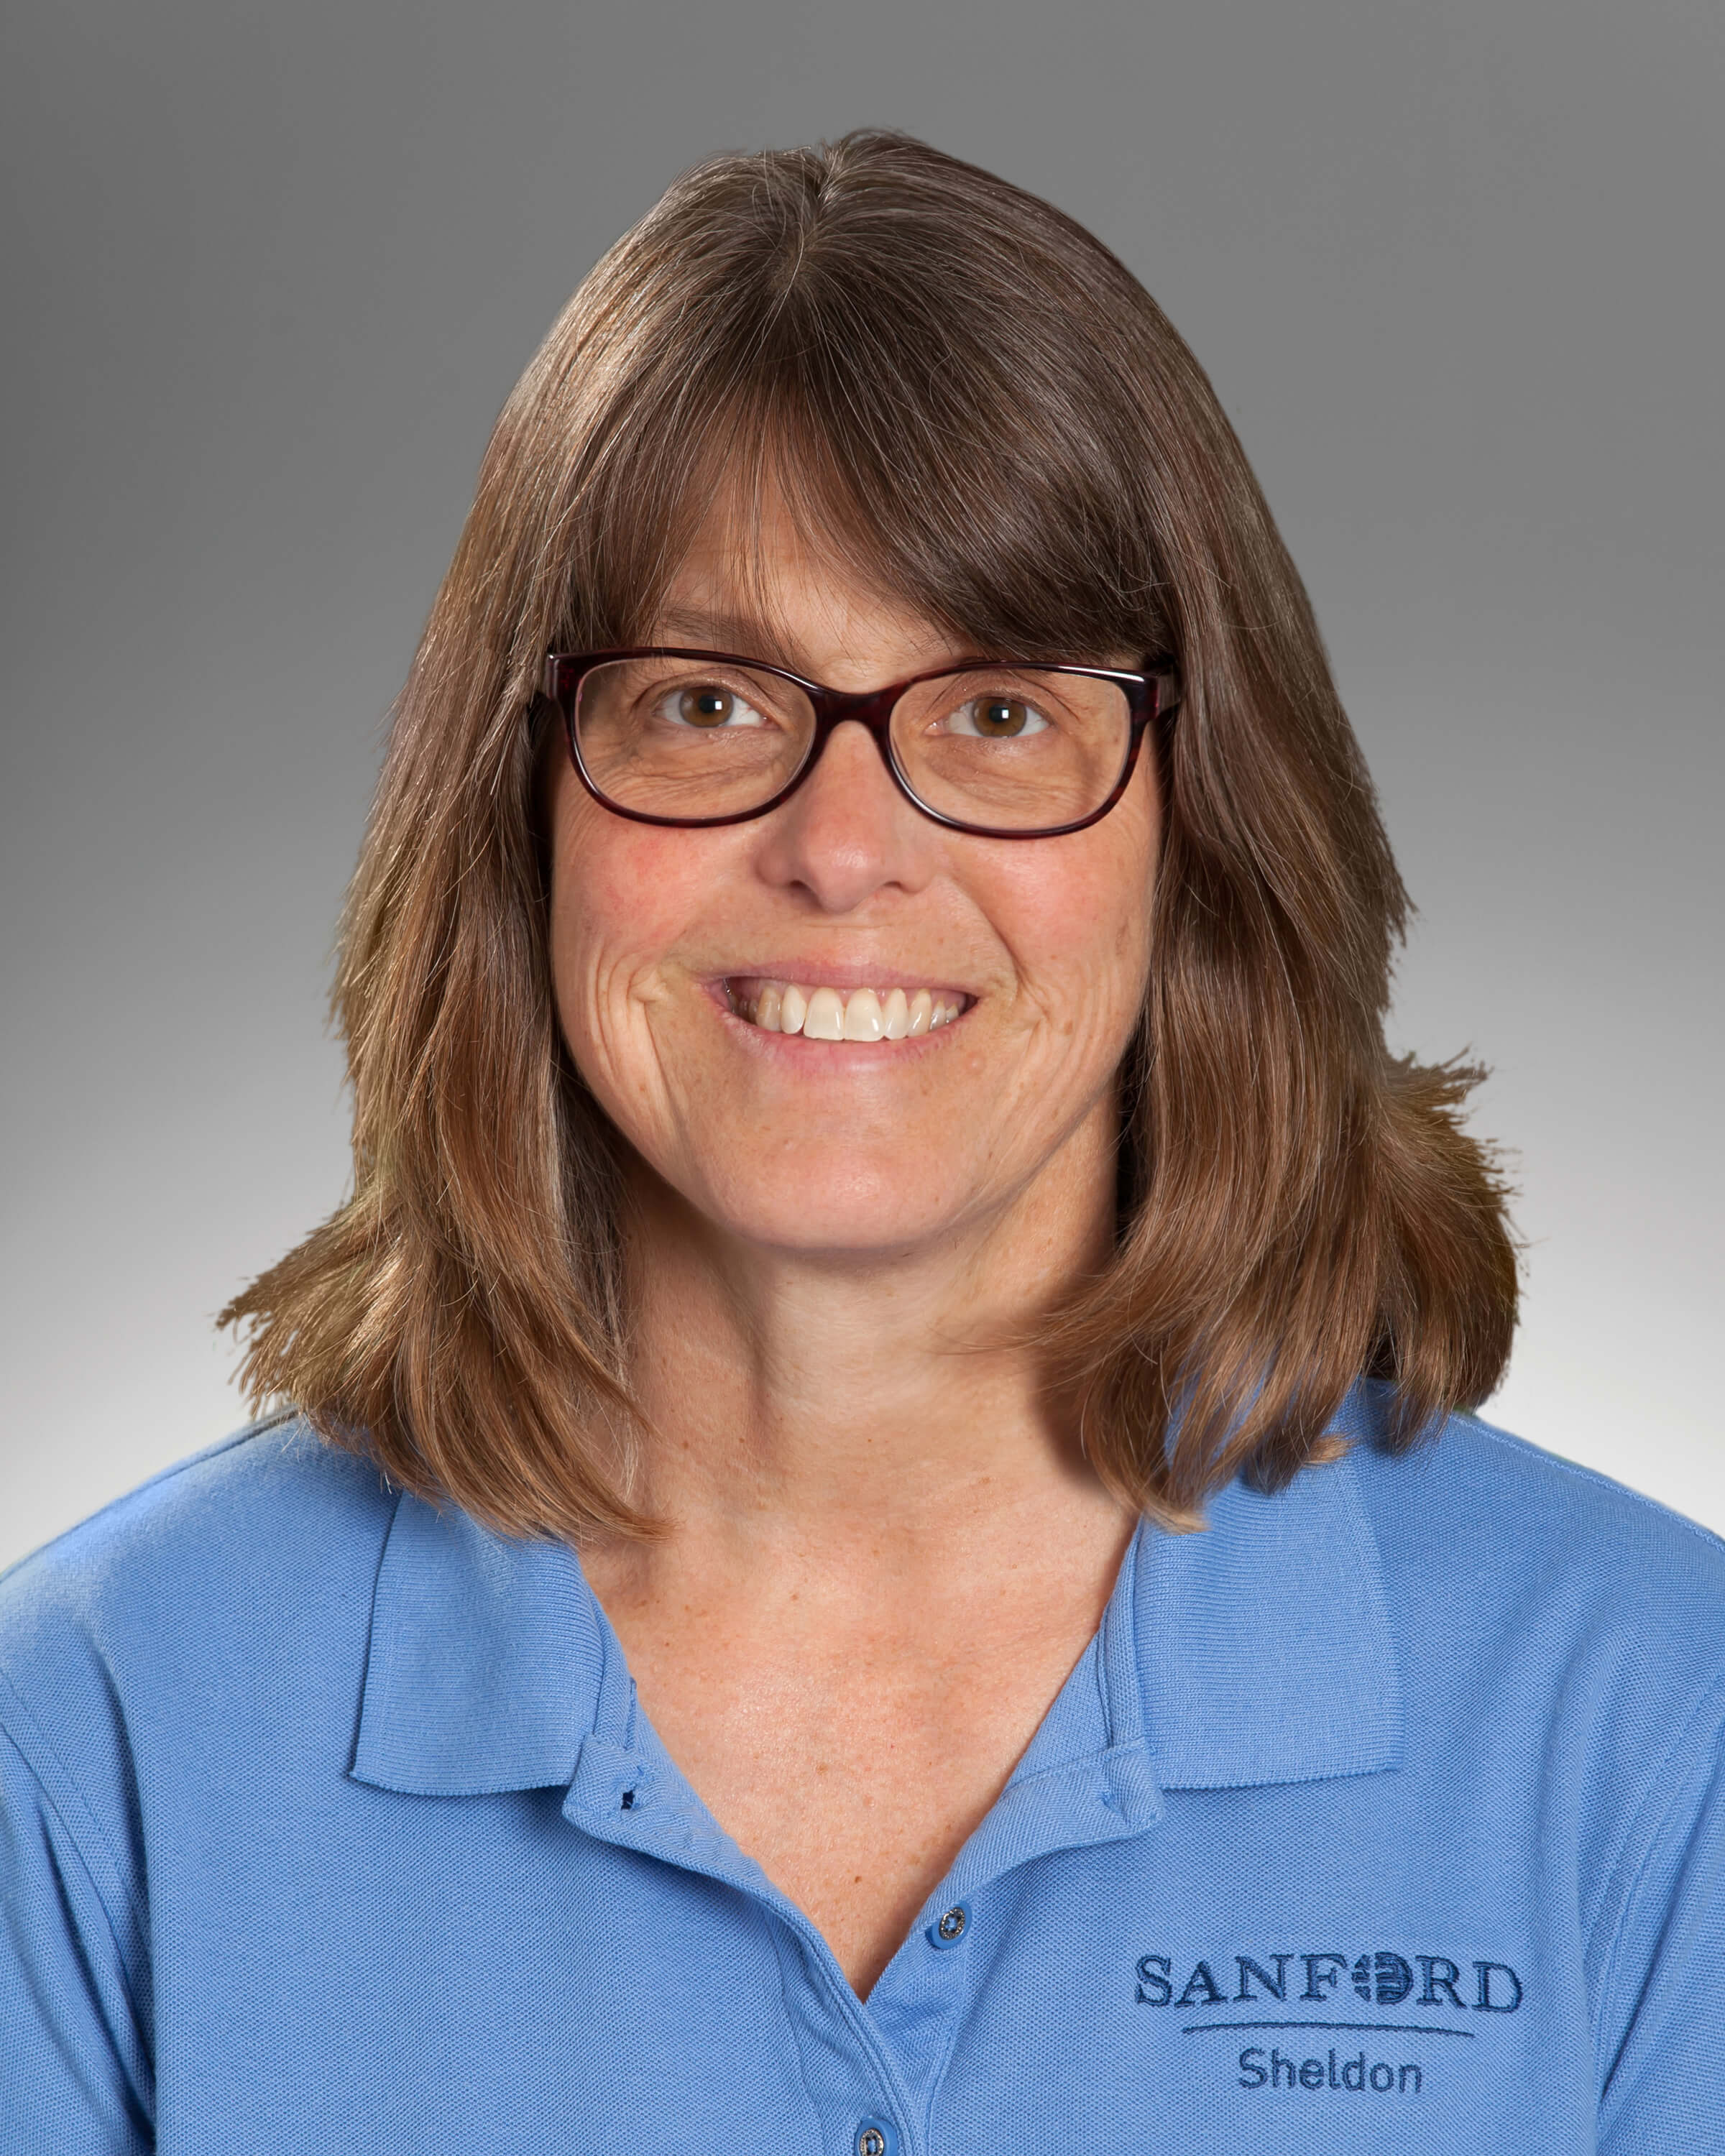 Physical therapist Donna Rosenboom